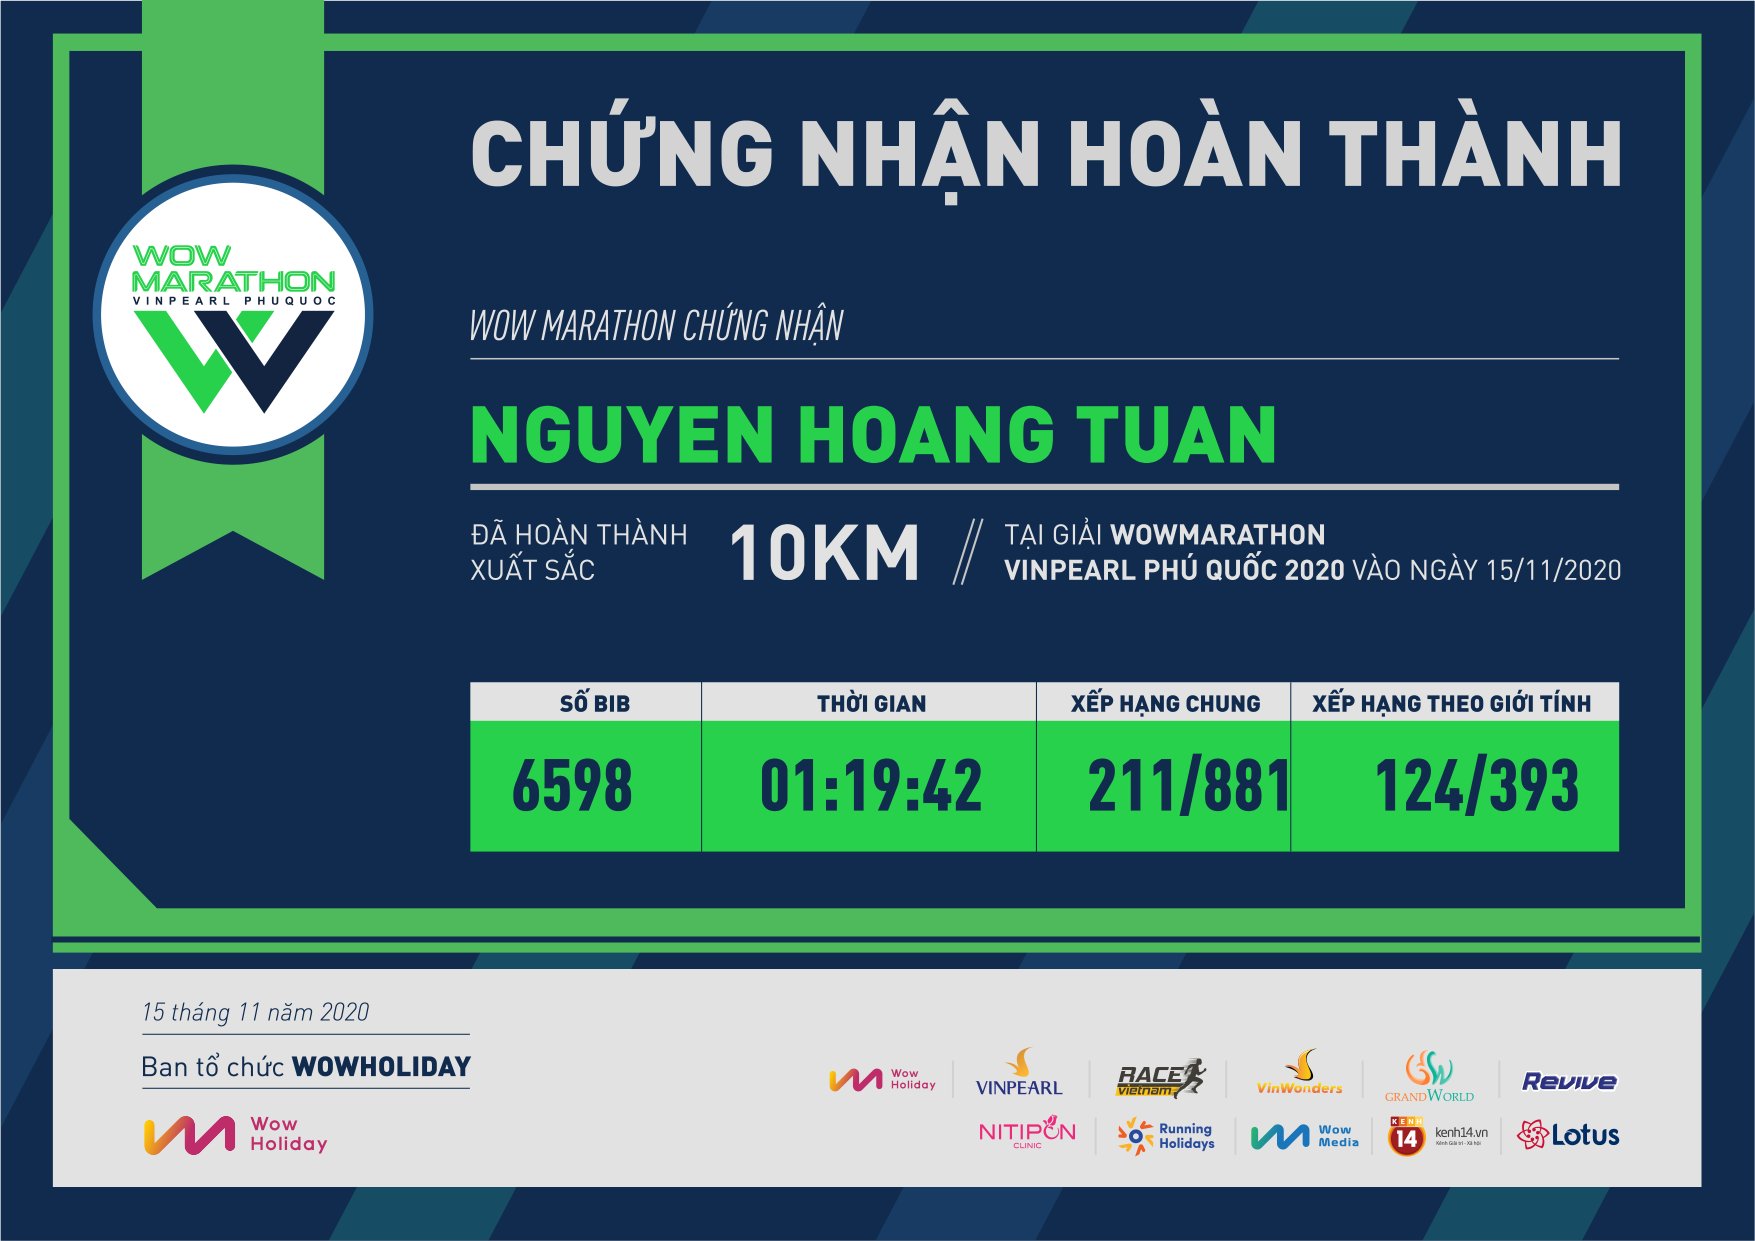 6598 - Nguyen Hoang Tuan